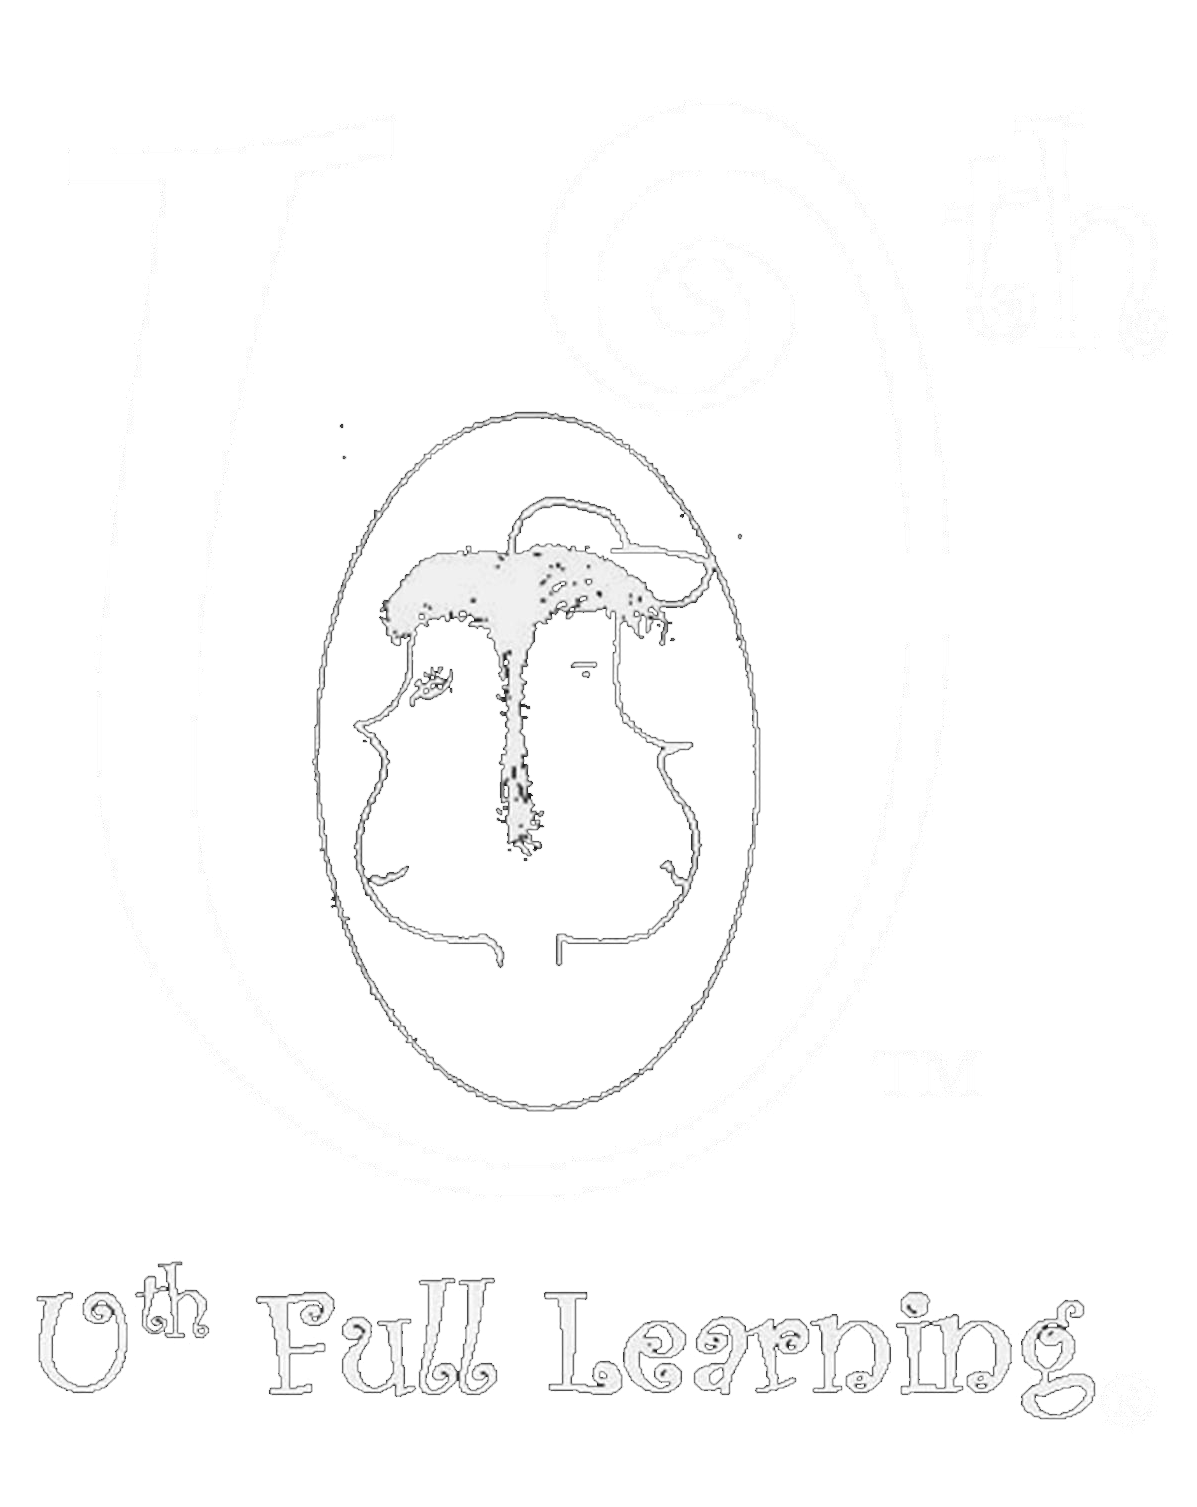 Uthfull Learning, LLC